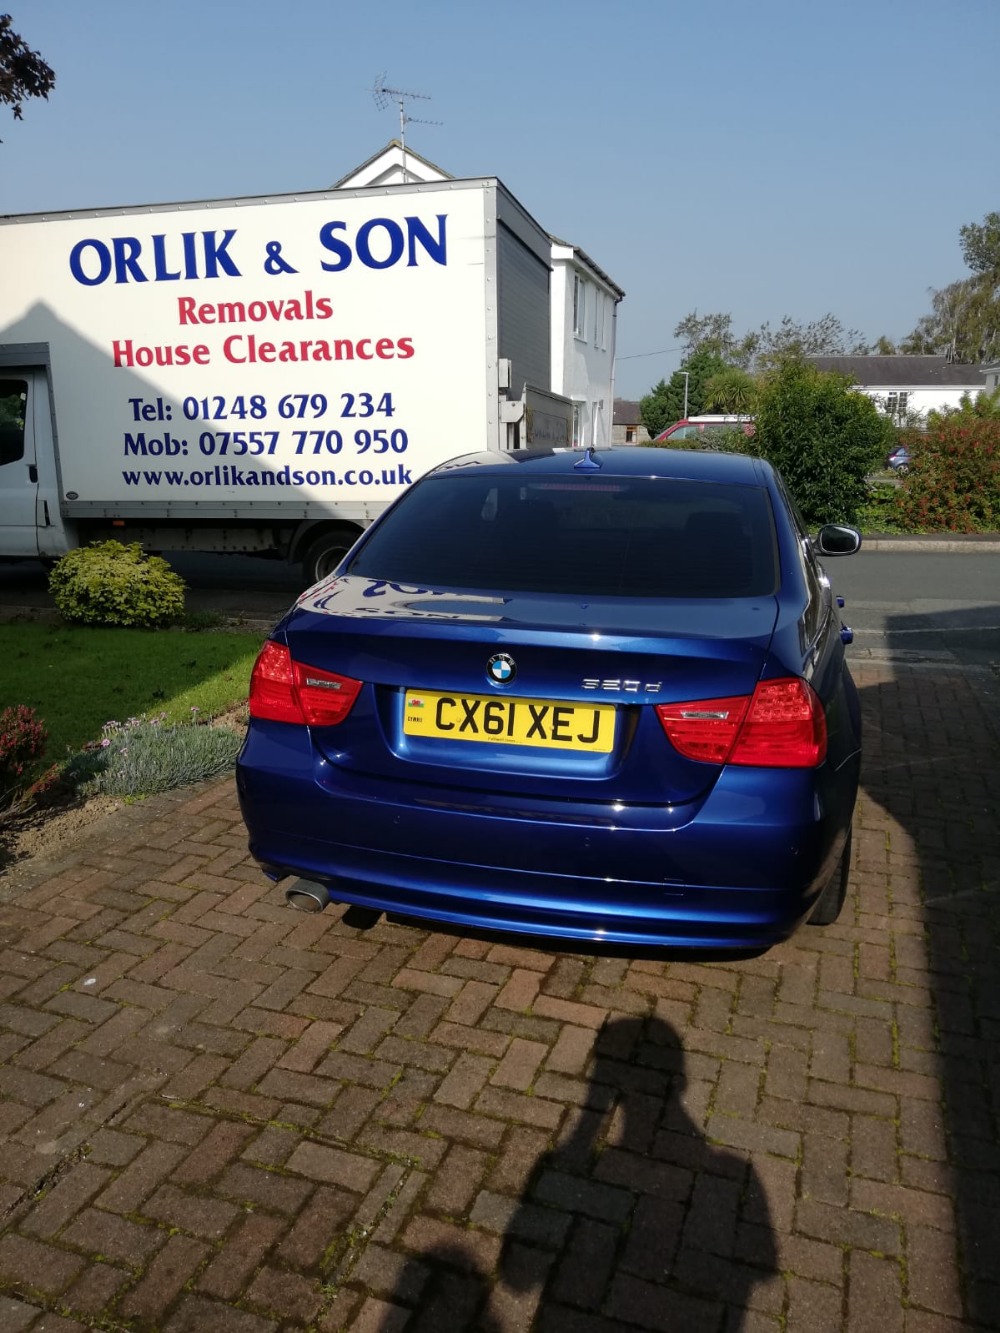 BMW 320 SALOON, Blue, Registration Number CX61 XEJ, Nov 2011 registered, untaxed, MOT to 11 - Image 2 of 15